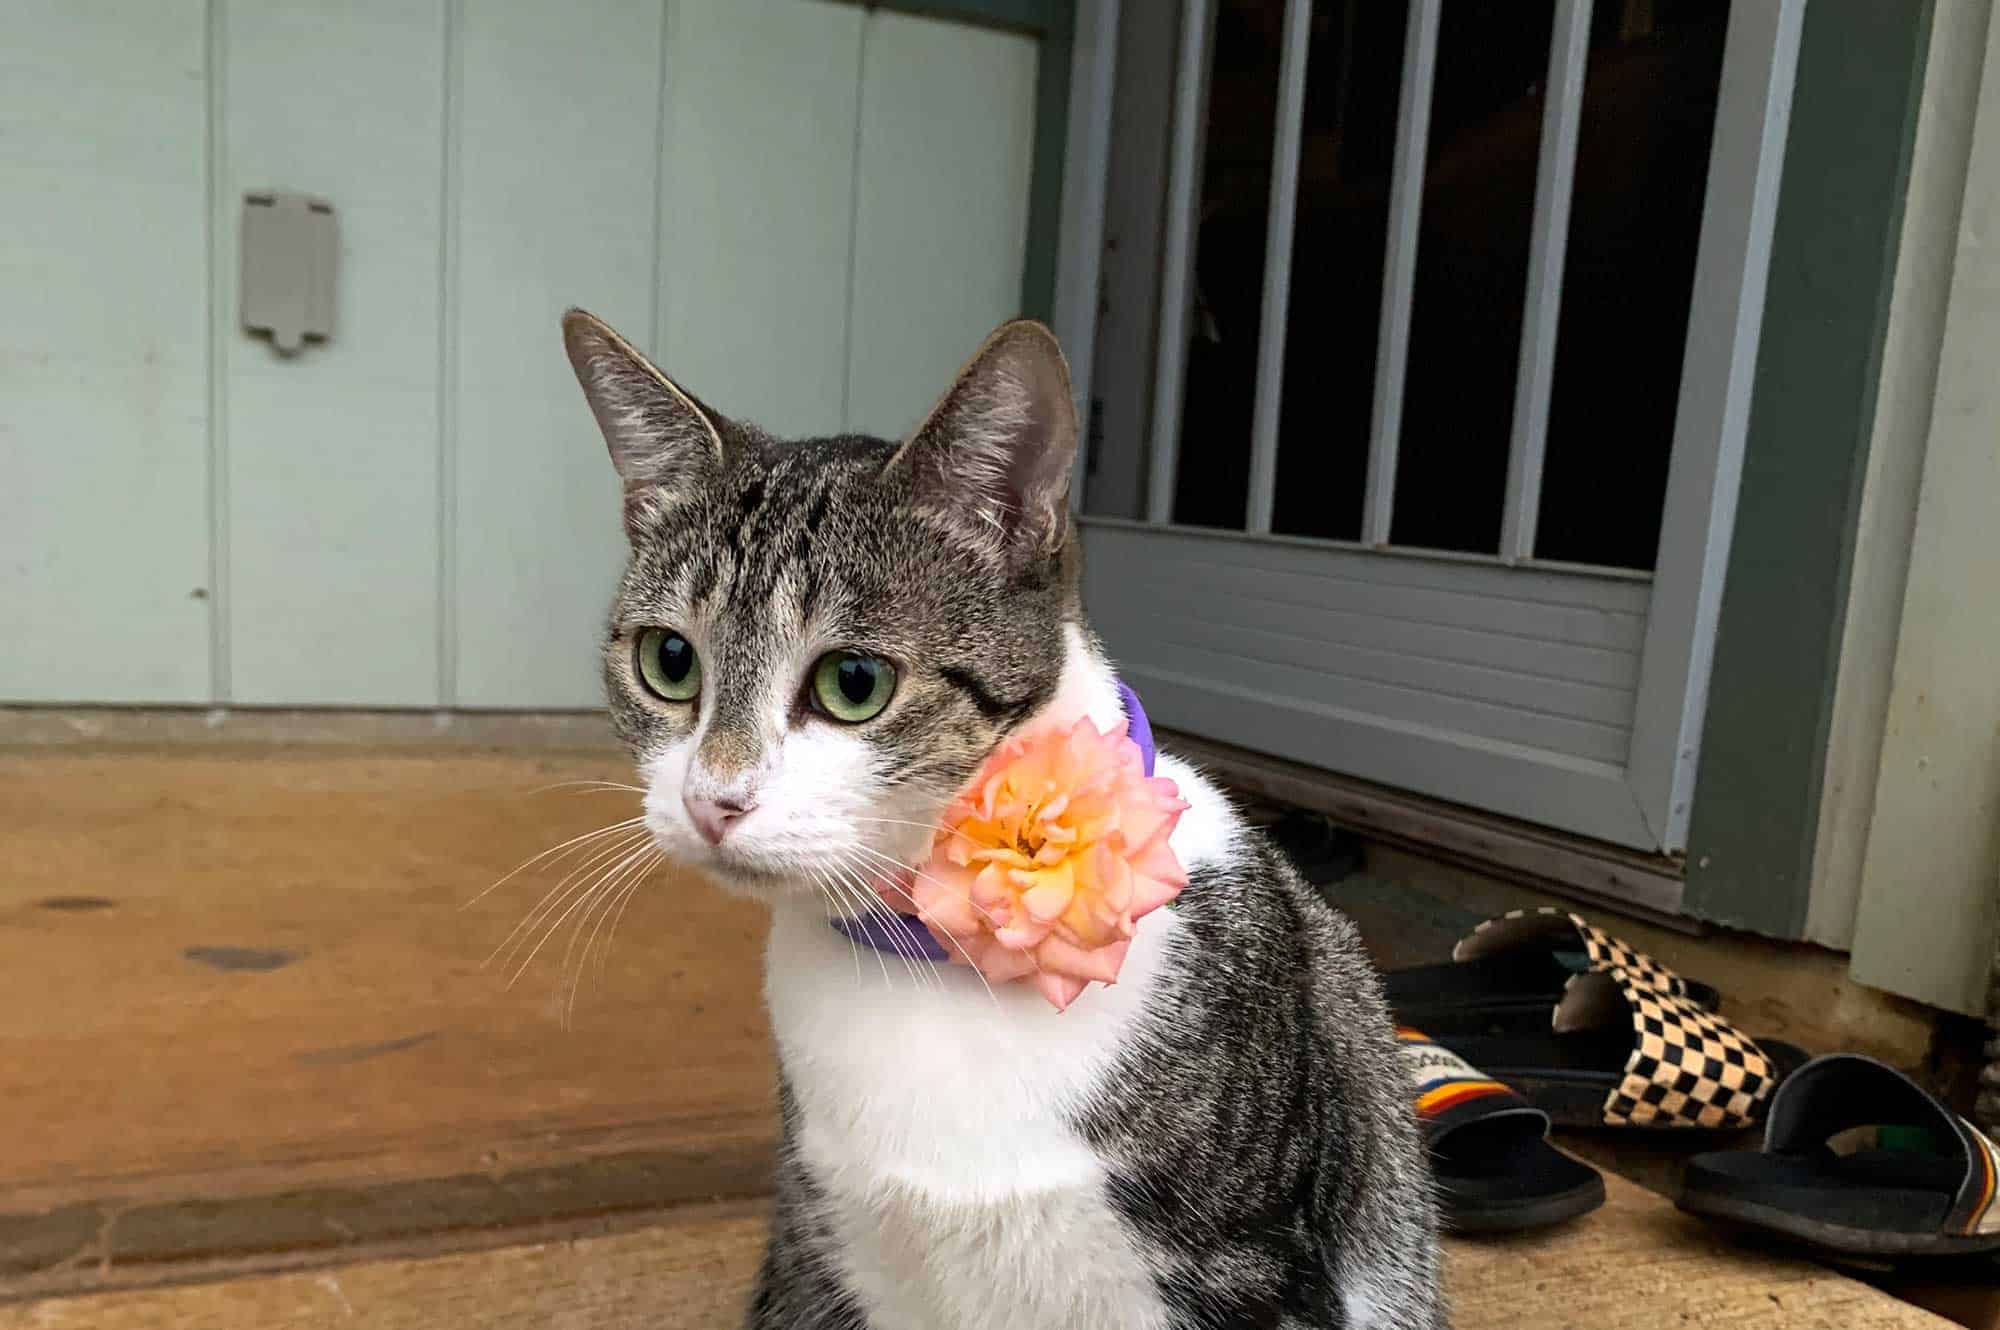 A cat wearing a flower